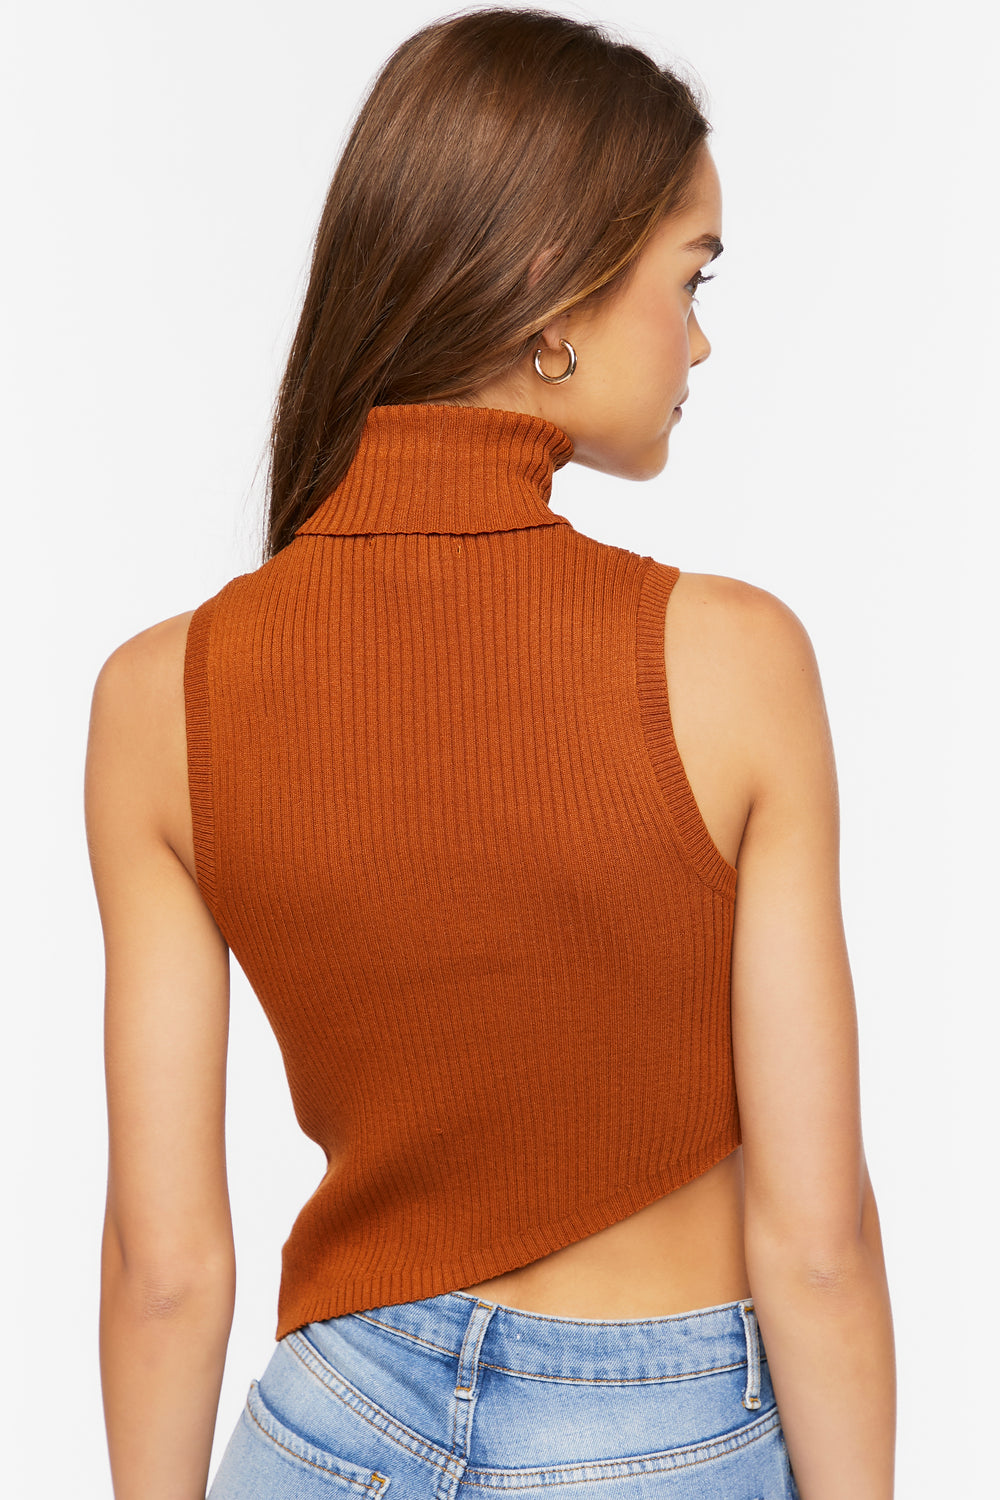 Sweater-Knit Asymmetrical Crop Top Brown